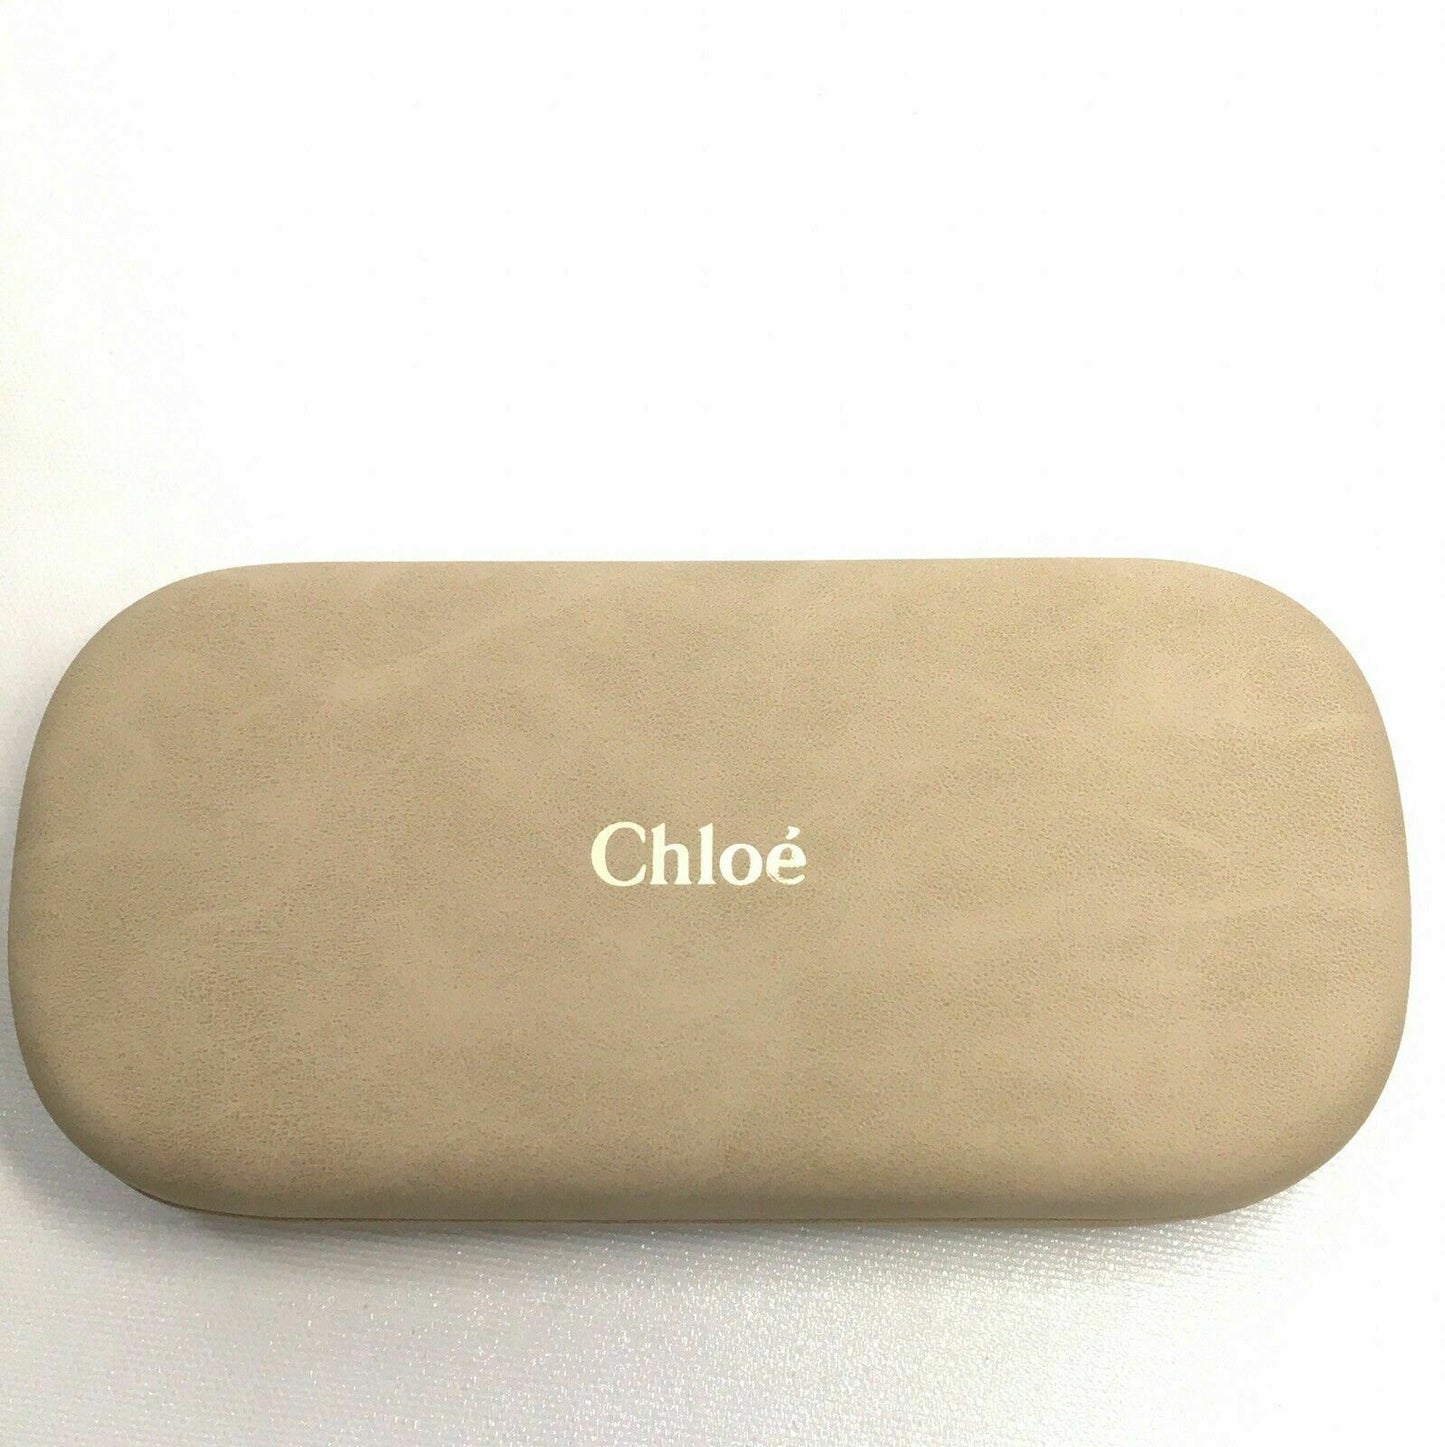 Chloe CE2634-218 46mm